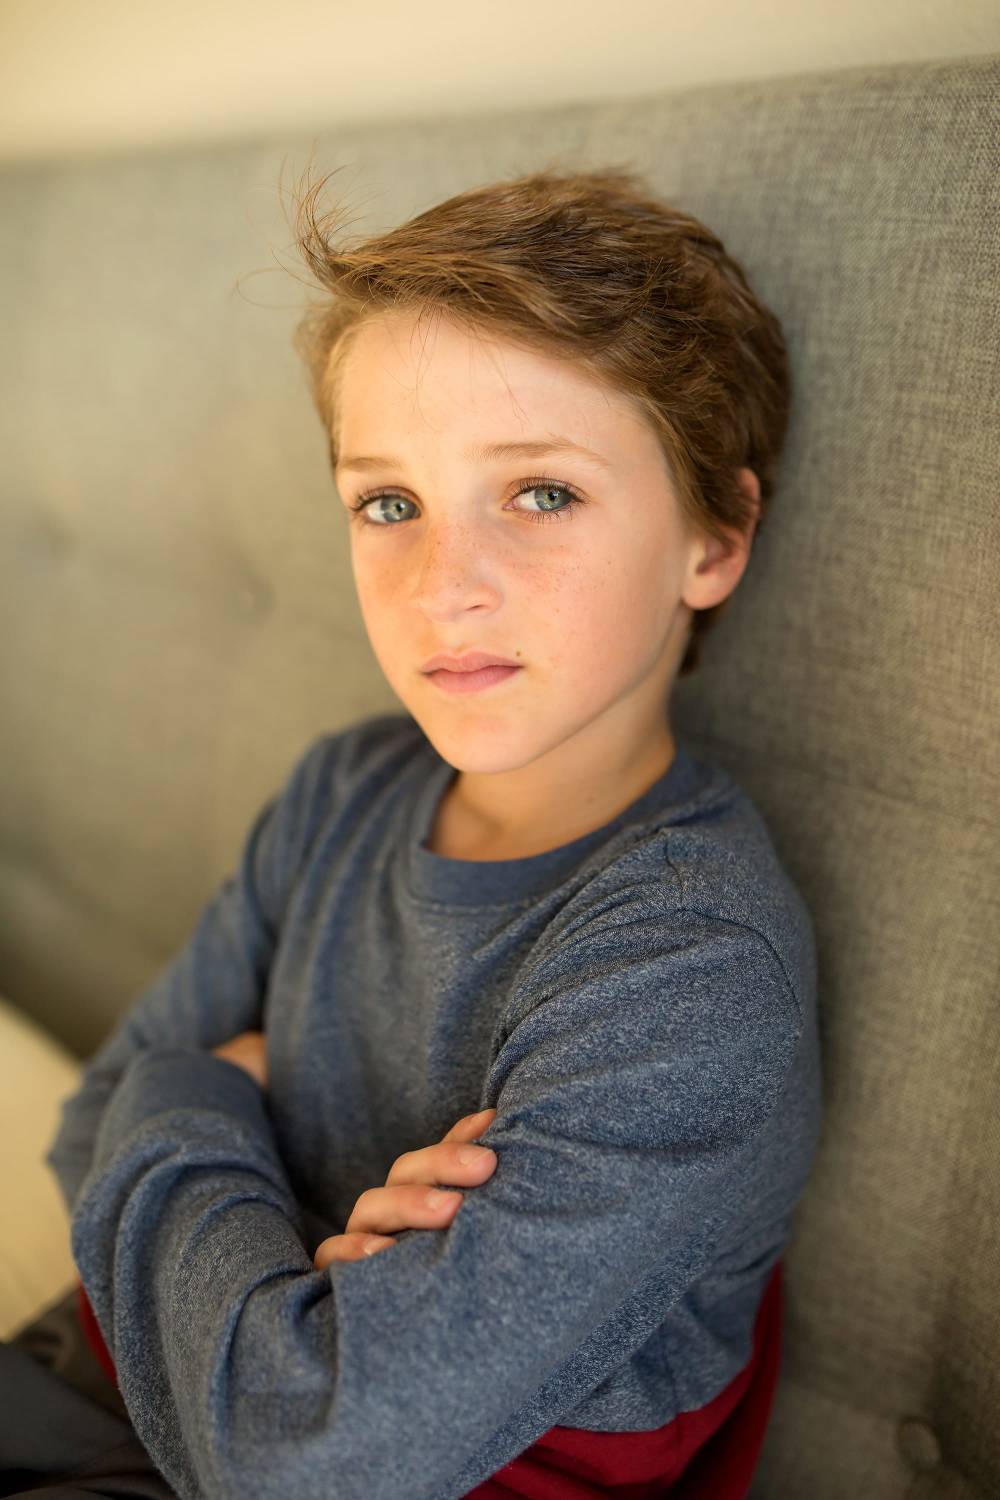 Laura Jennings' son Connor, age eight. Photo: Laura Jennings